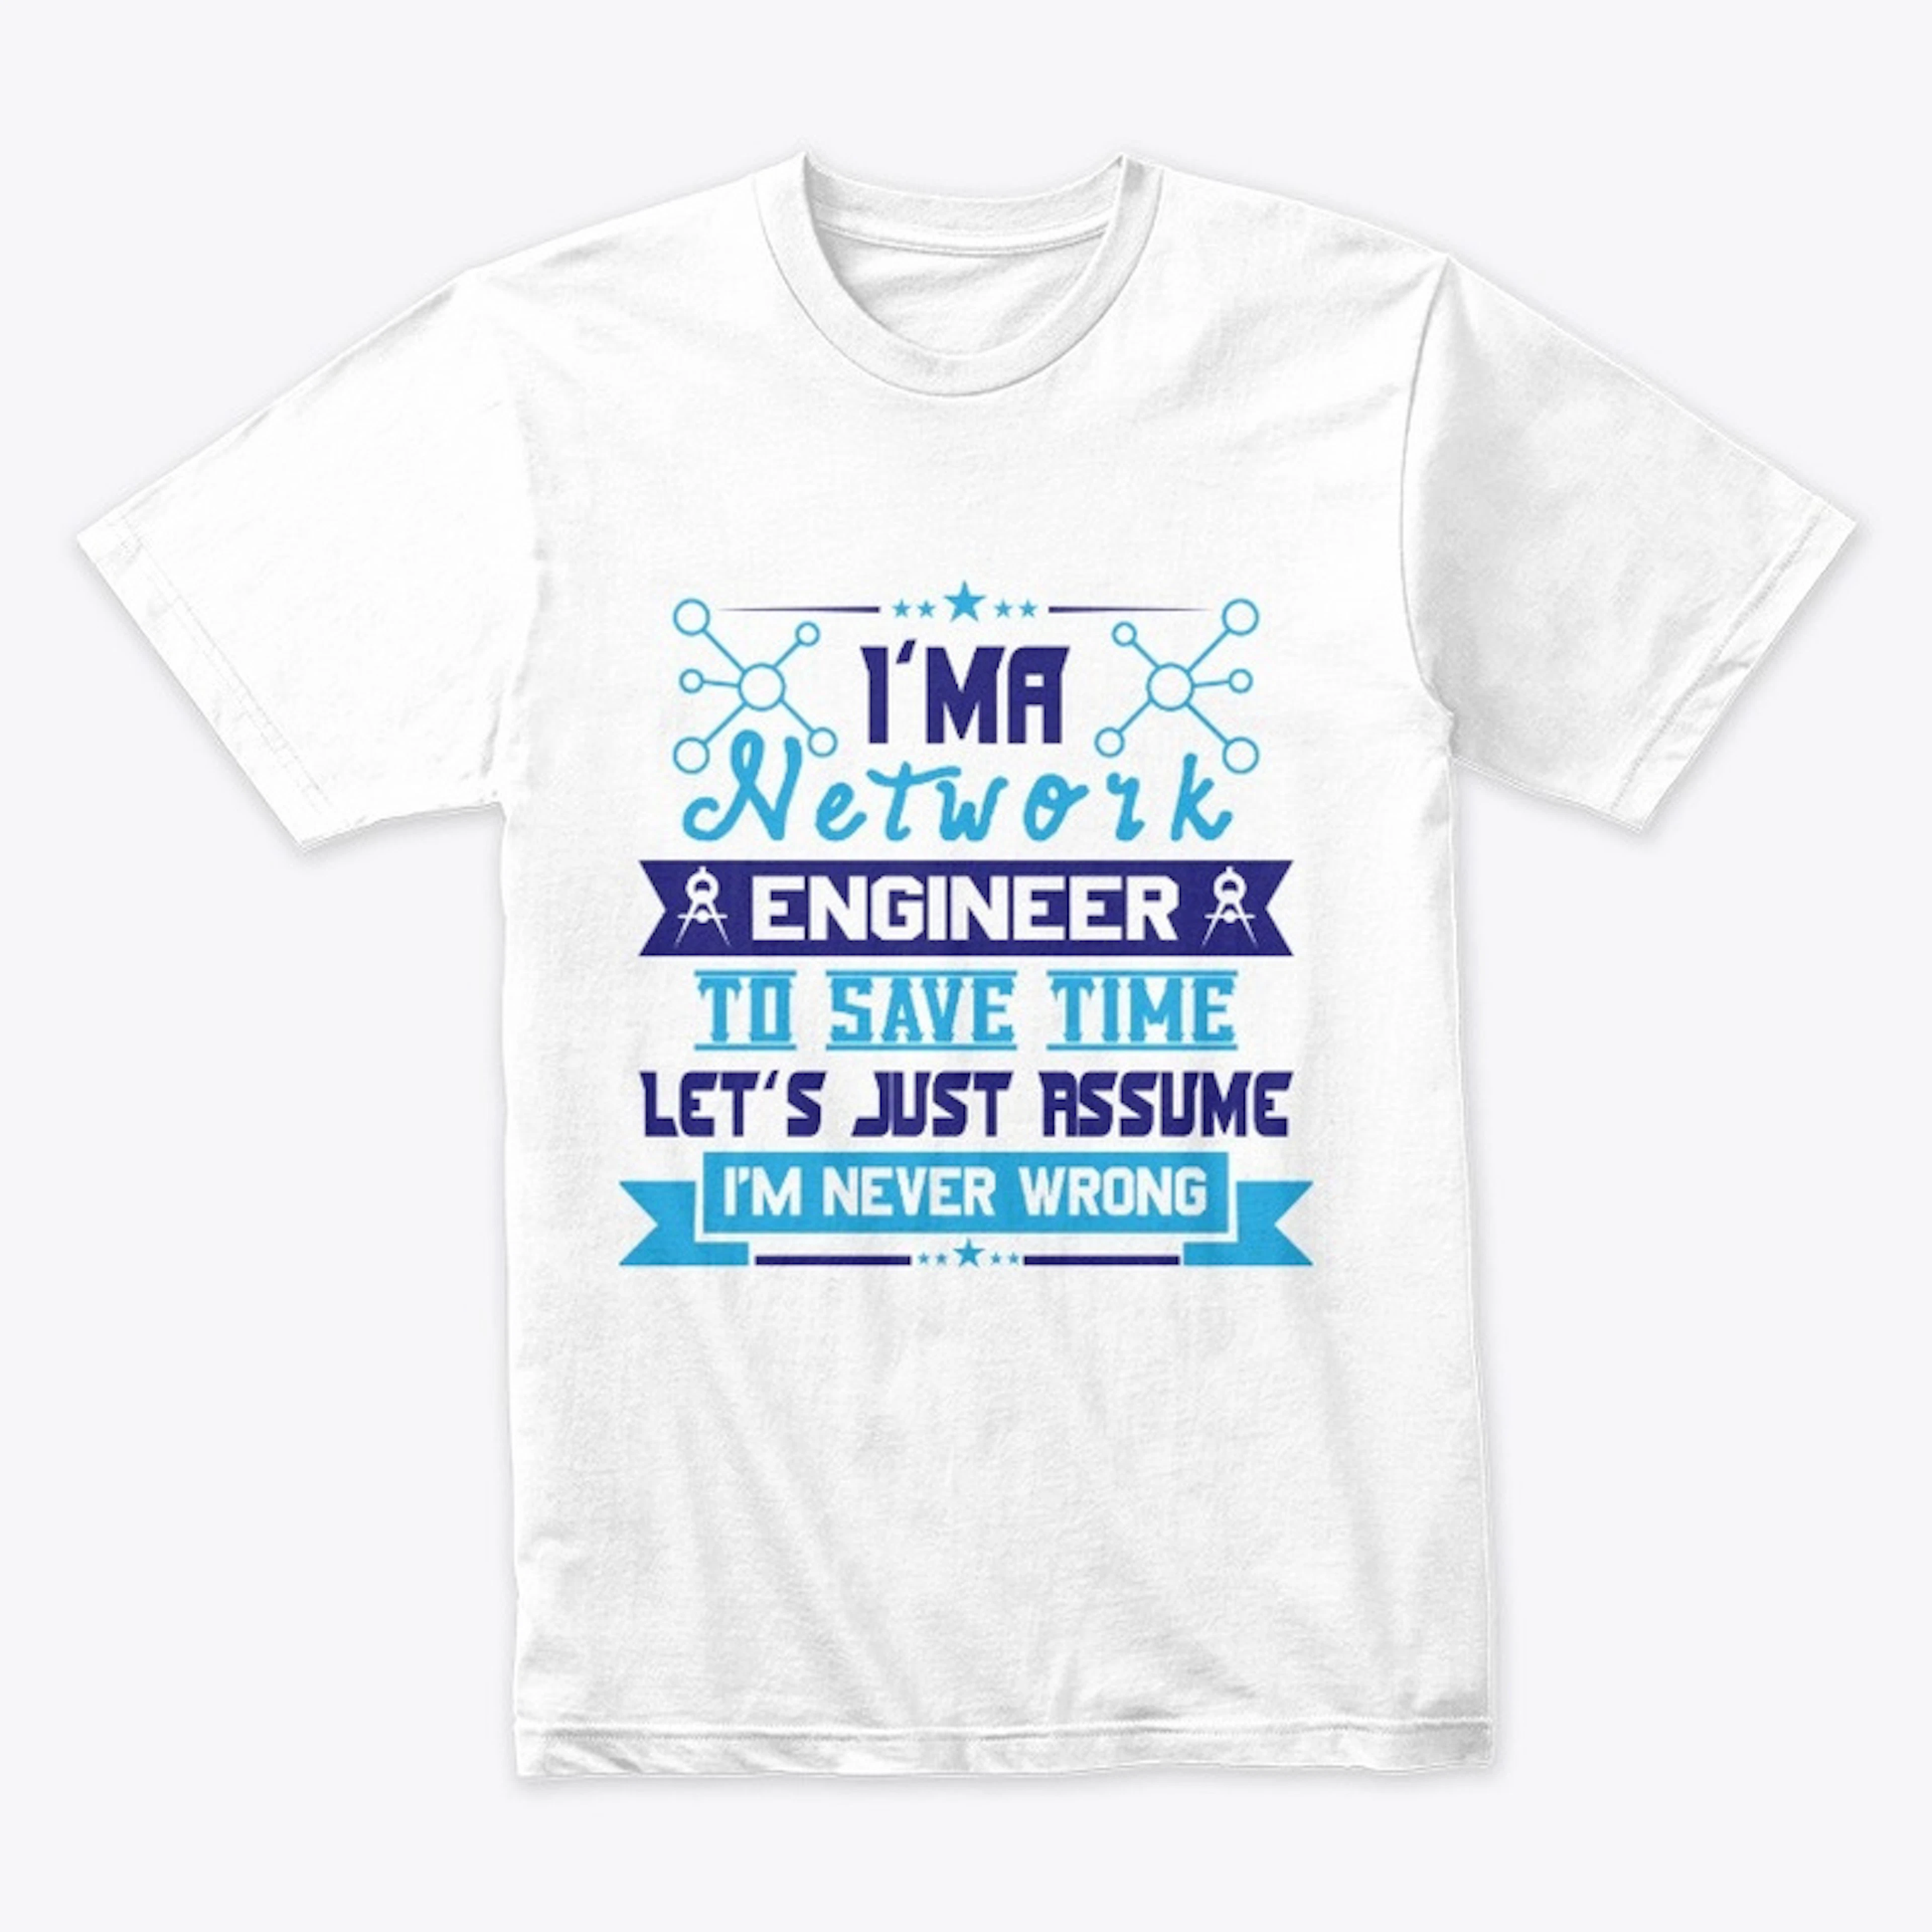 Network Engineer T-Shirt